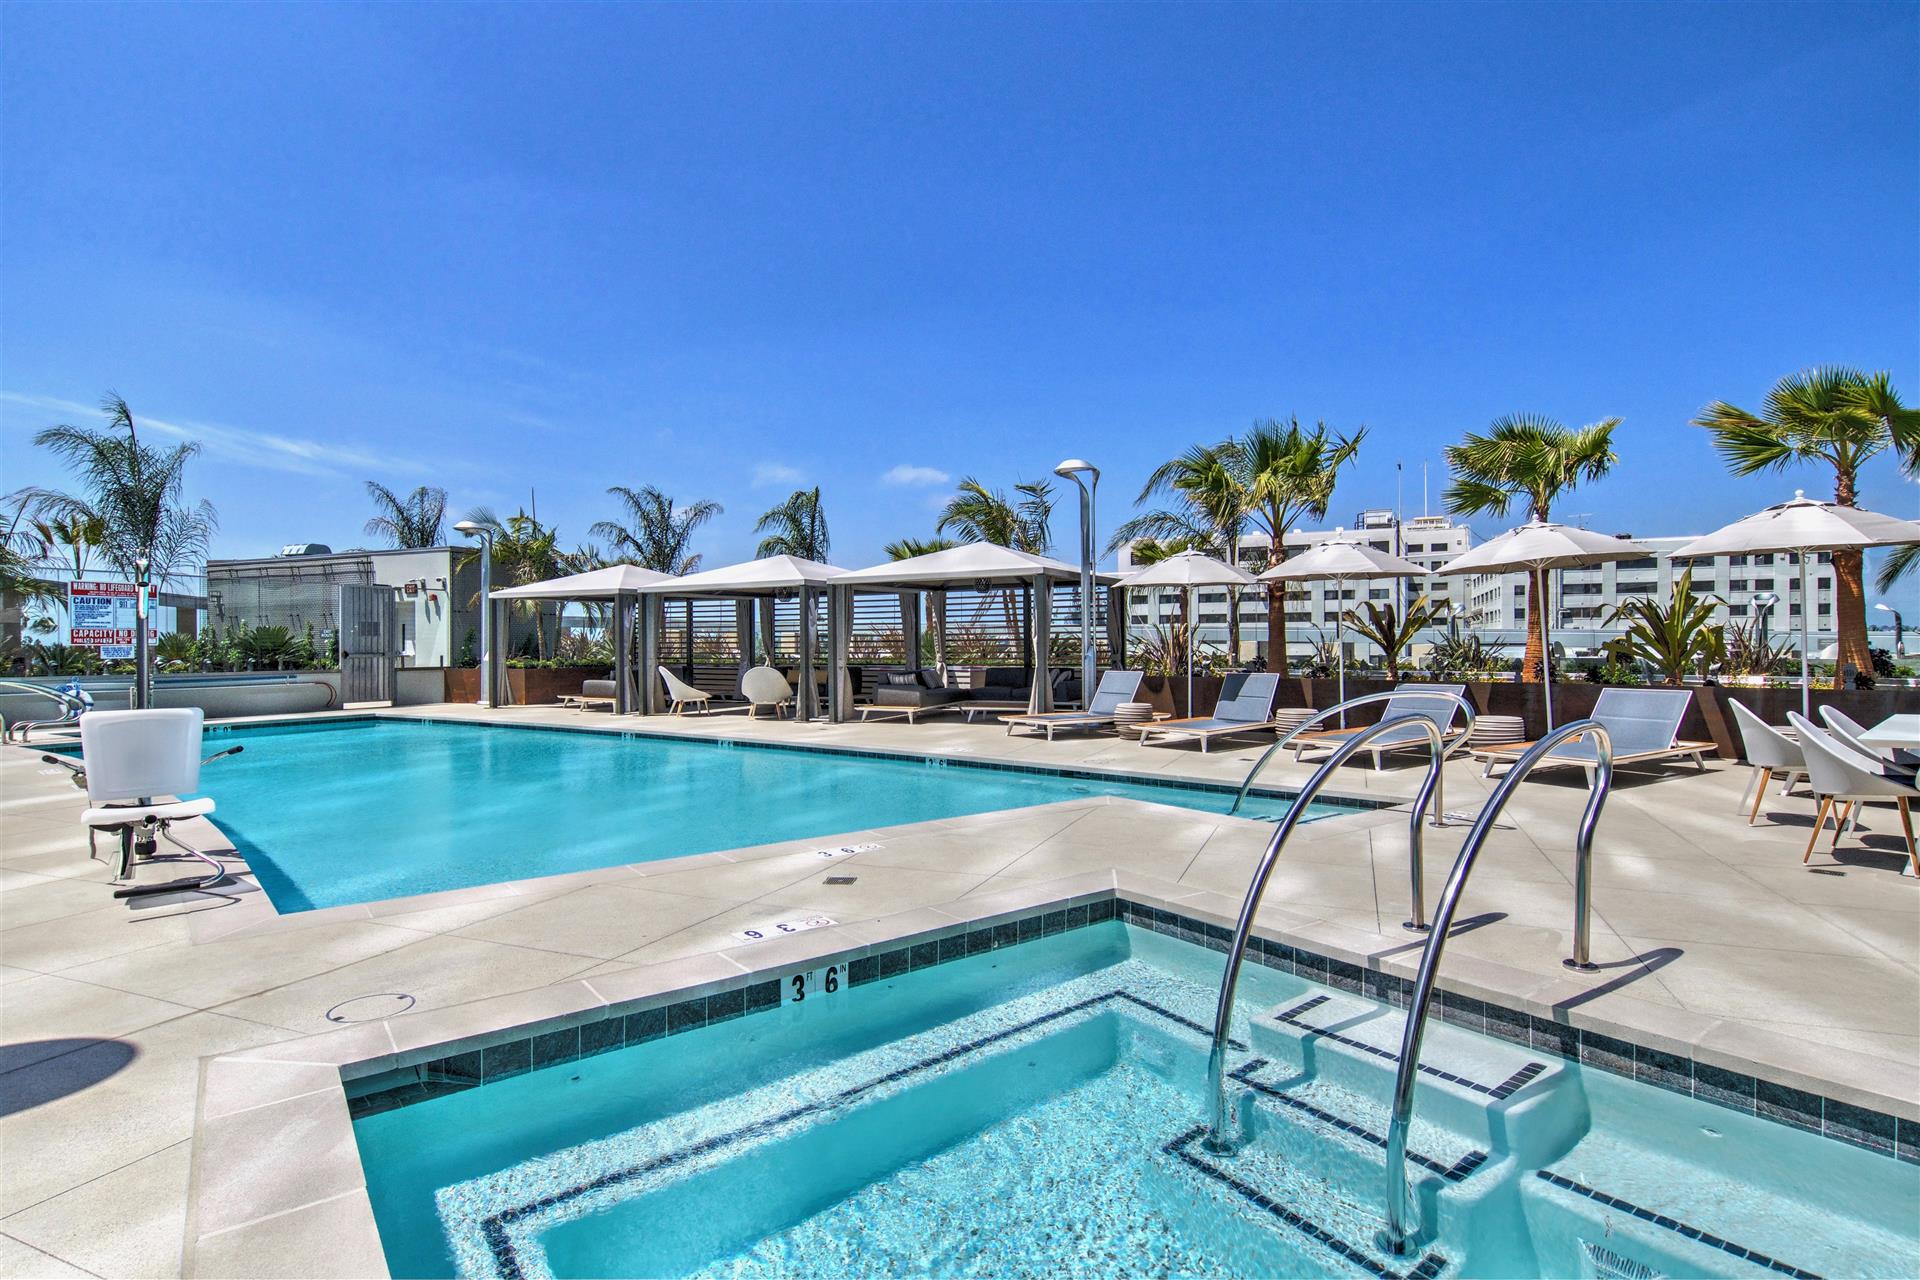 Pacific Gate condominiums pool in San Diego